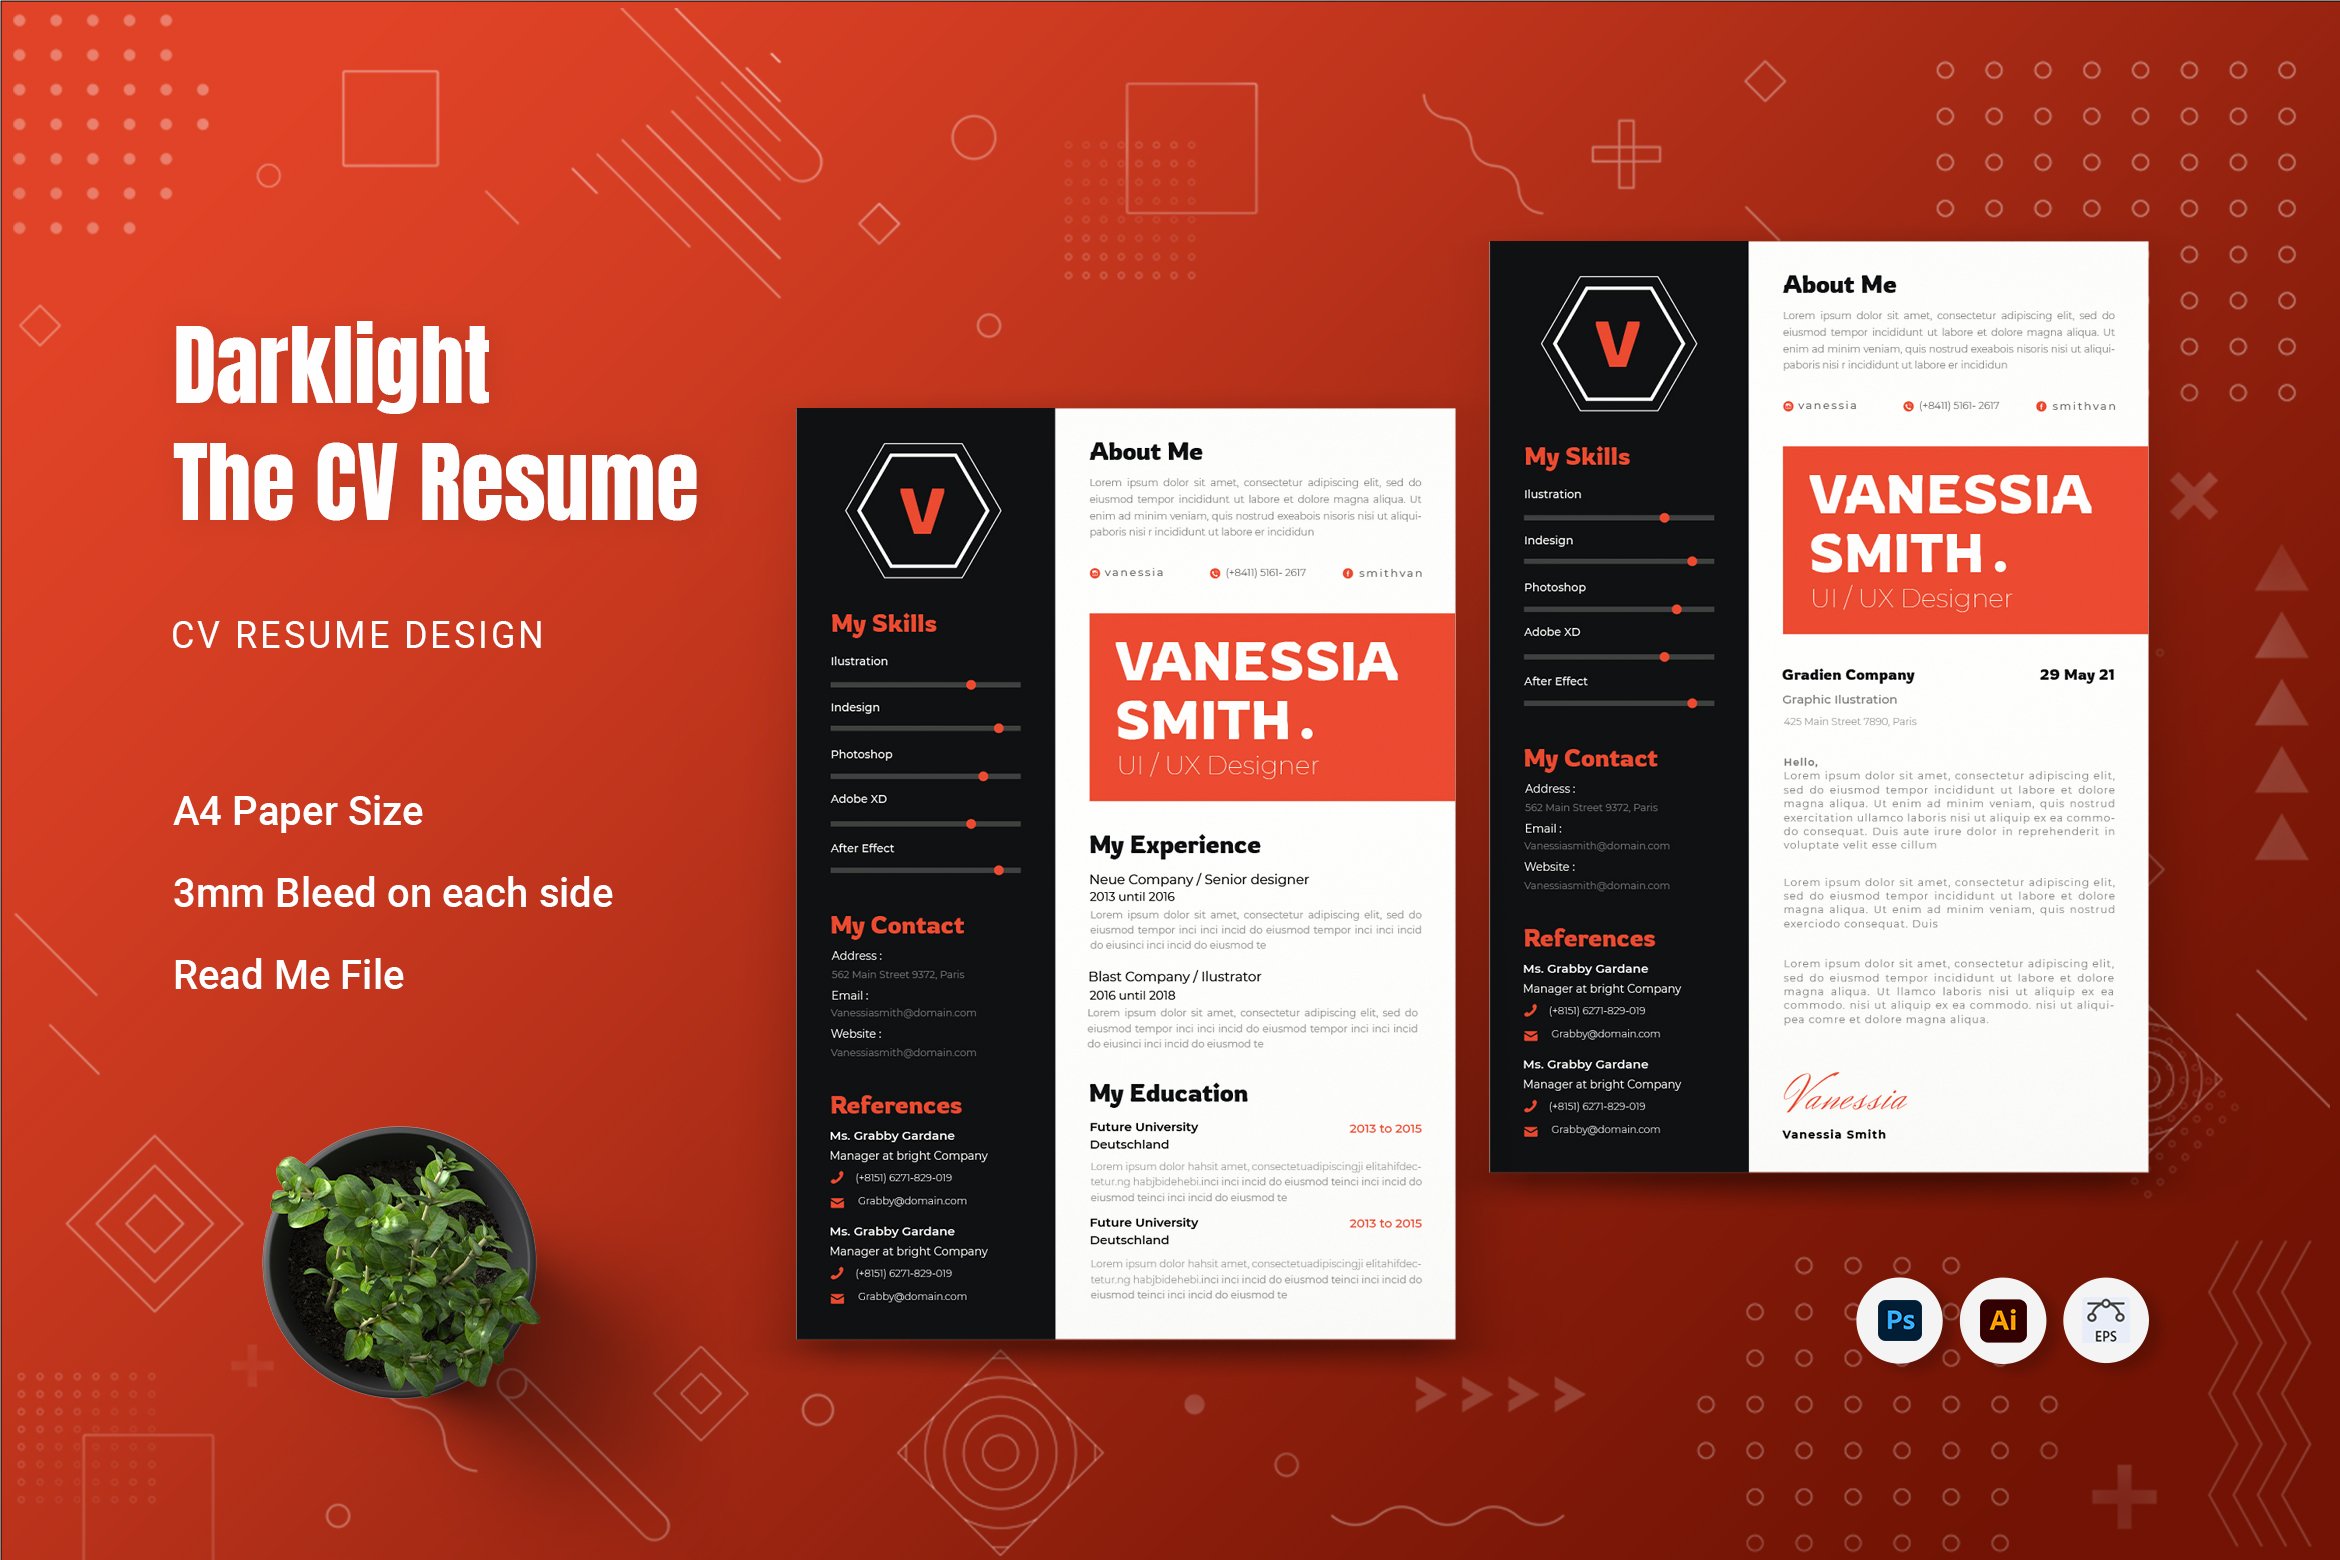 Darklight CV Resume cover image.